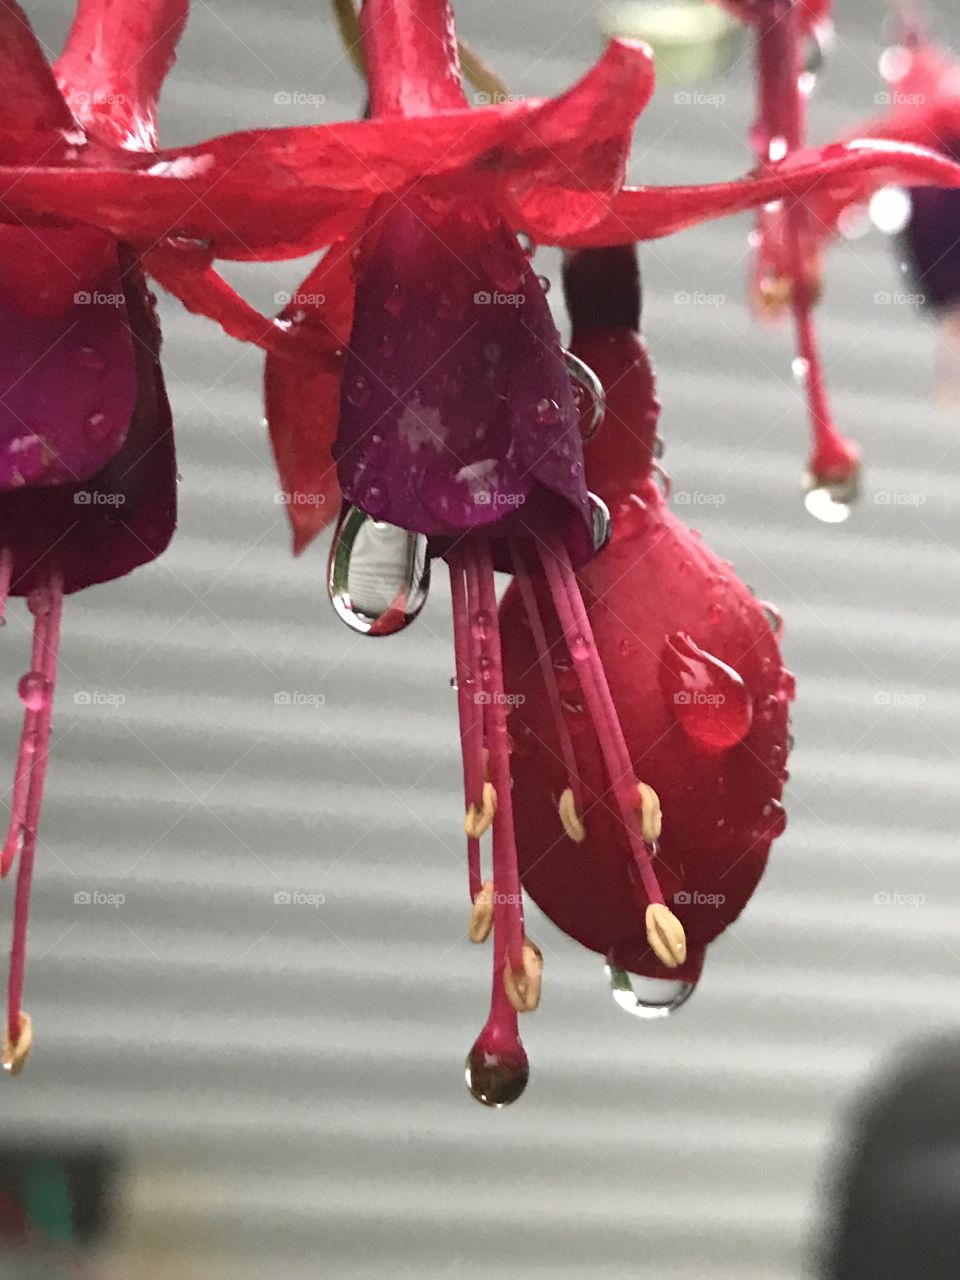 Raindrops on red flower petal 